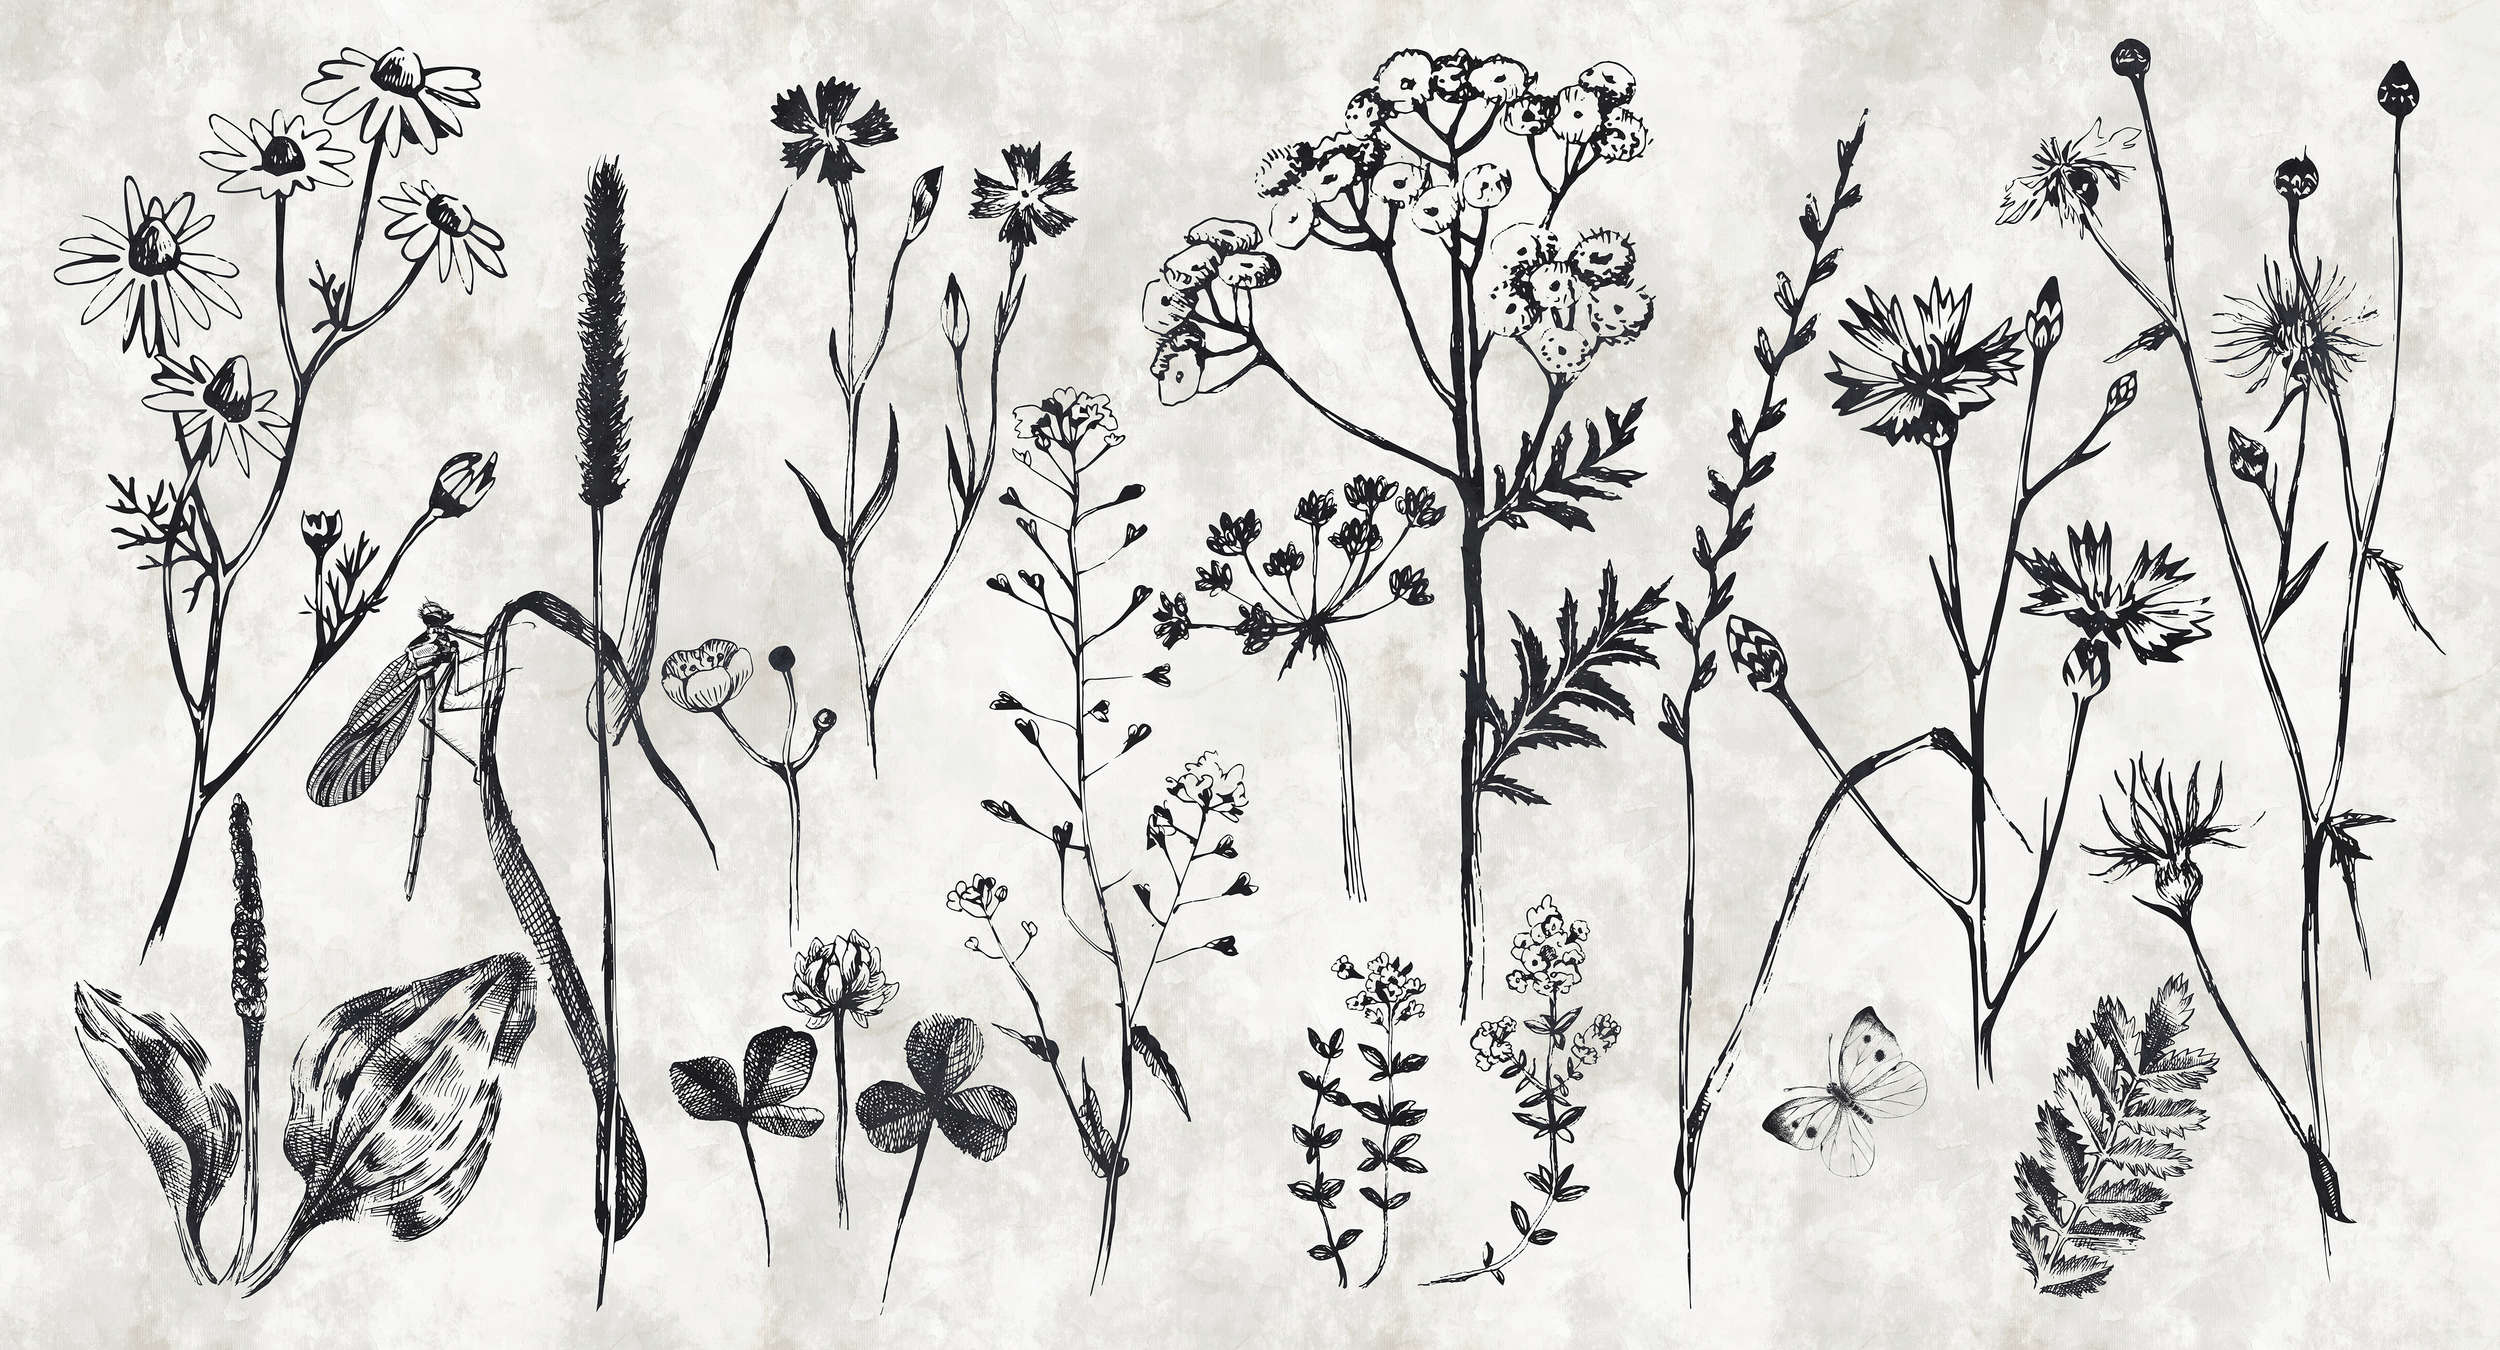             Herbs mural for the kitchen - White, Black
        